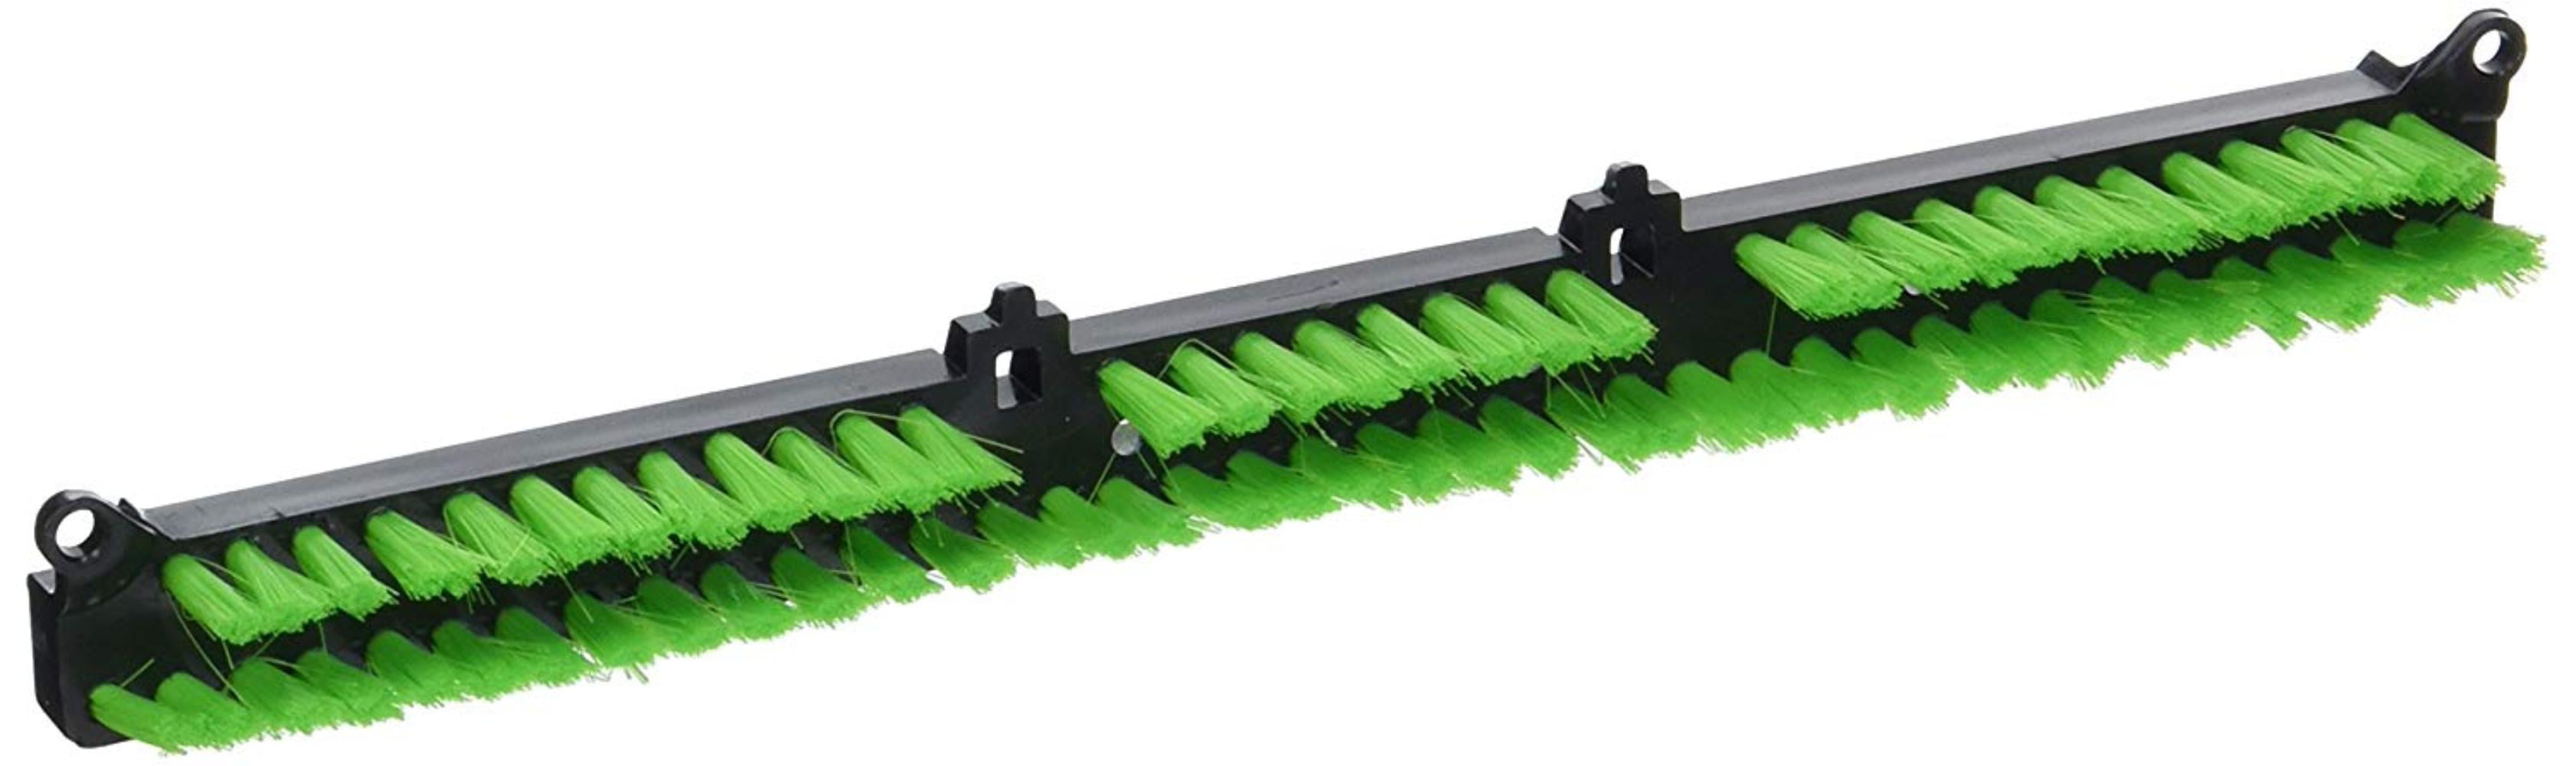 48447002 Genuine Hoover SteamVac Carpet Steam Cleaner Stationary Brush Strip 